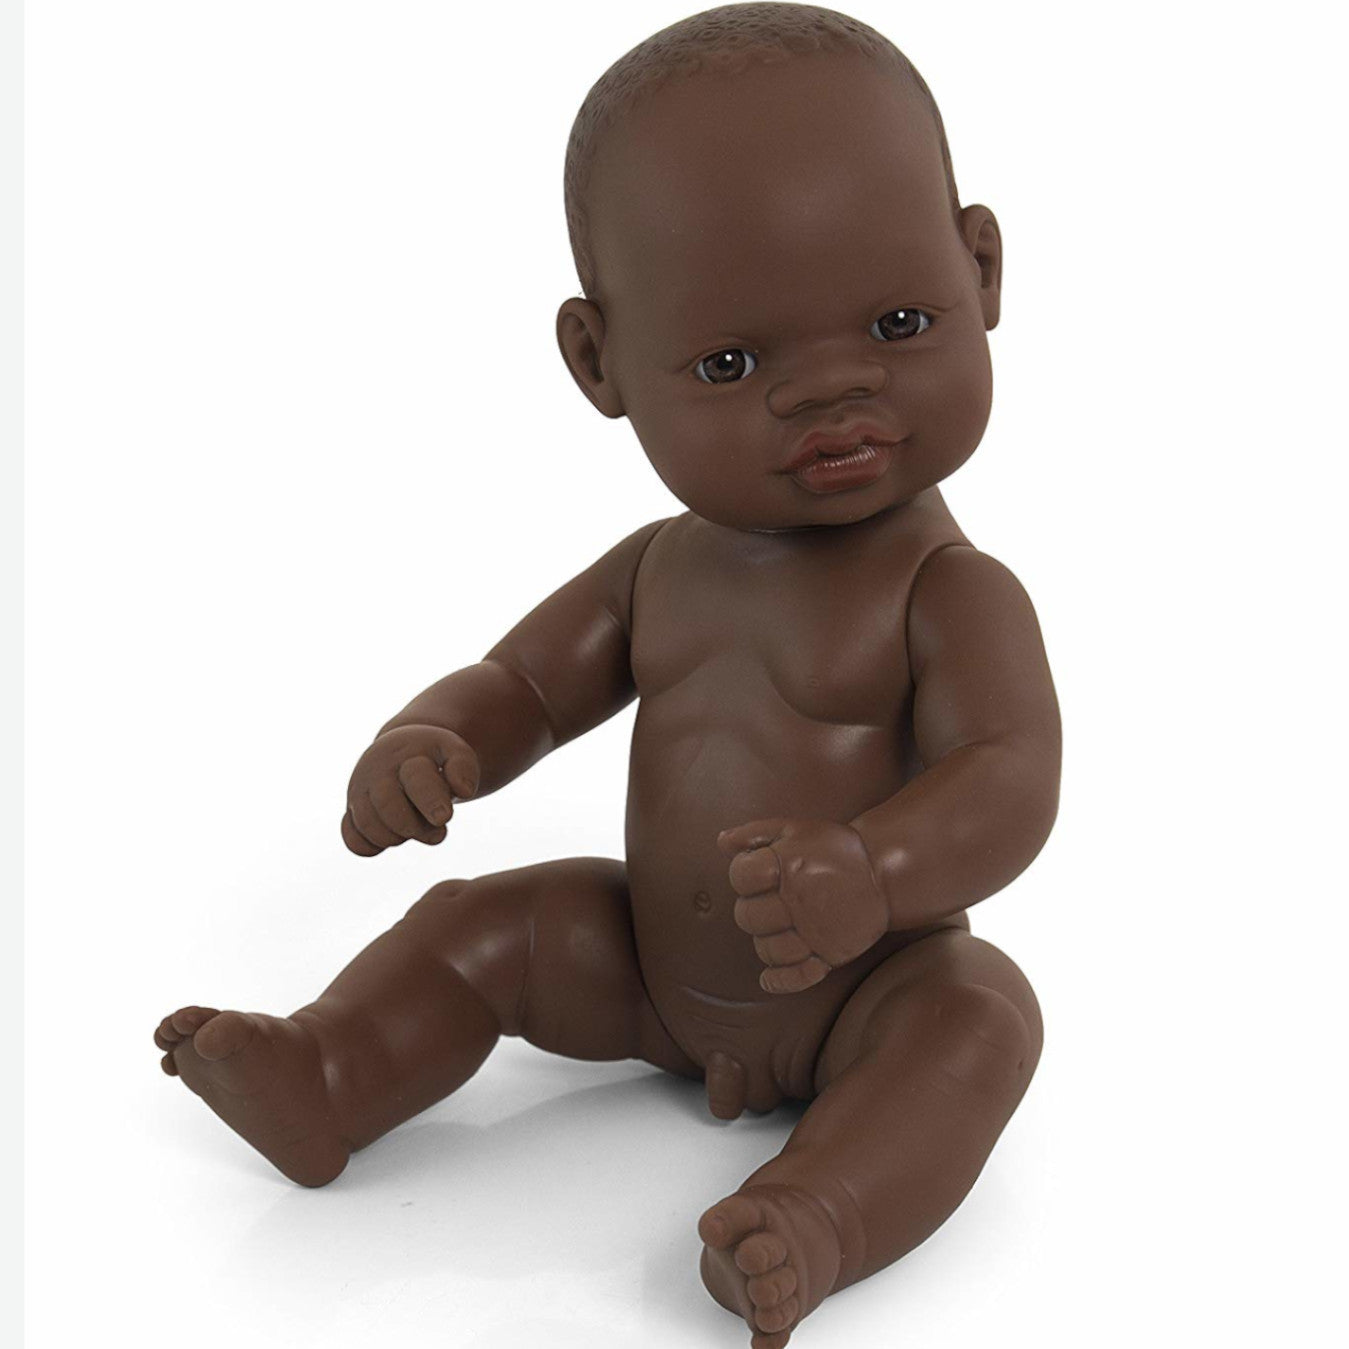 Miniland Doll Boy African 32cm No Clothes